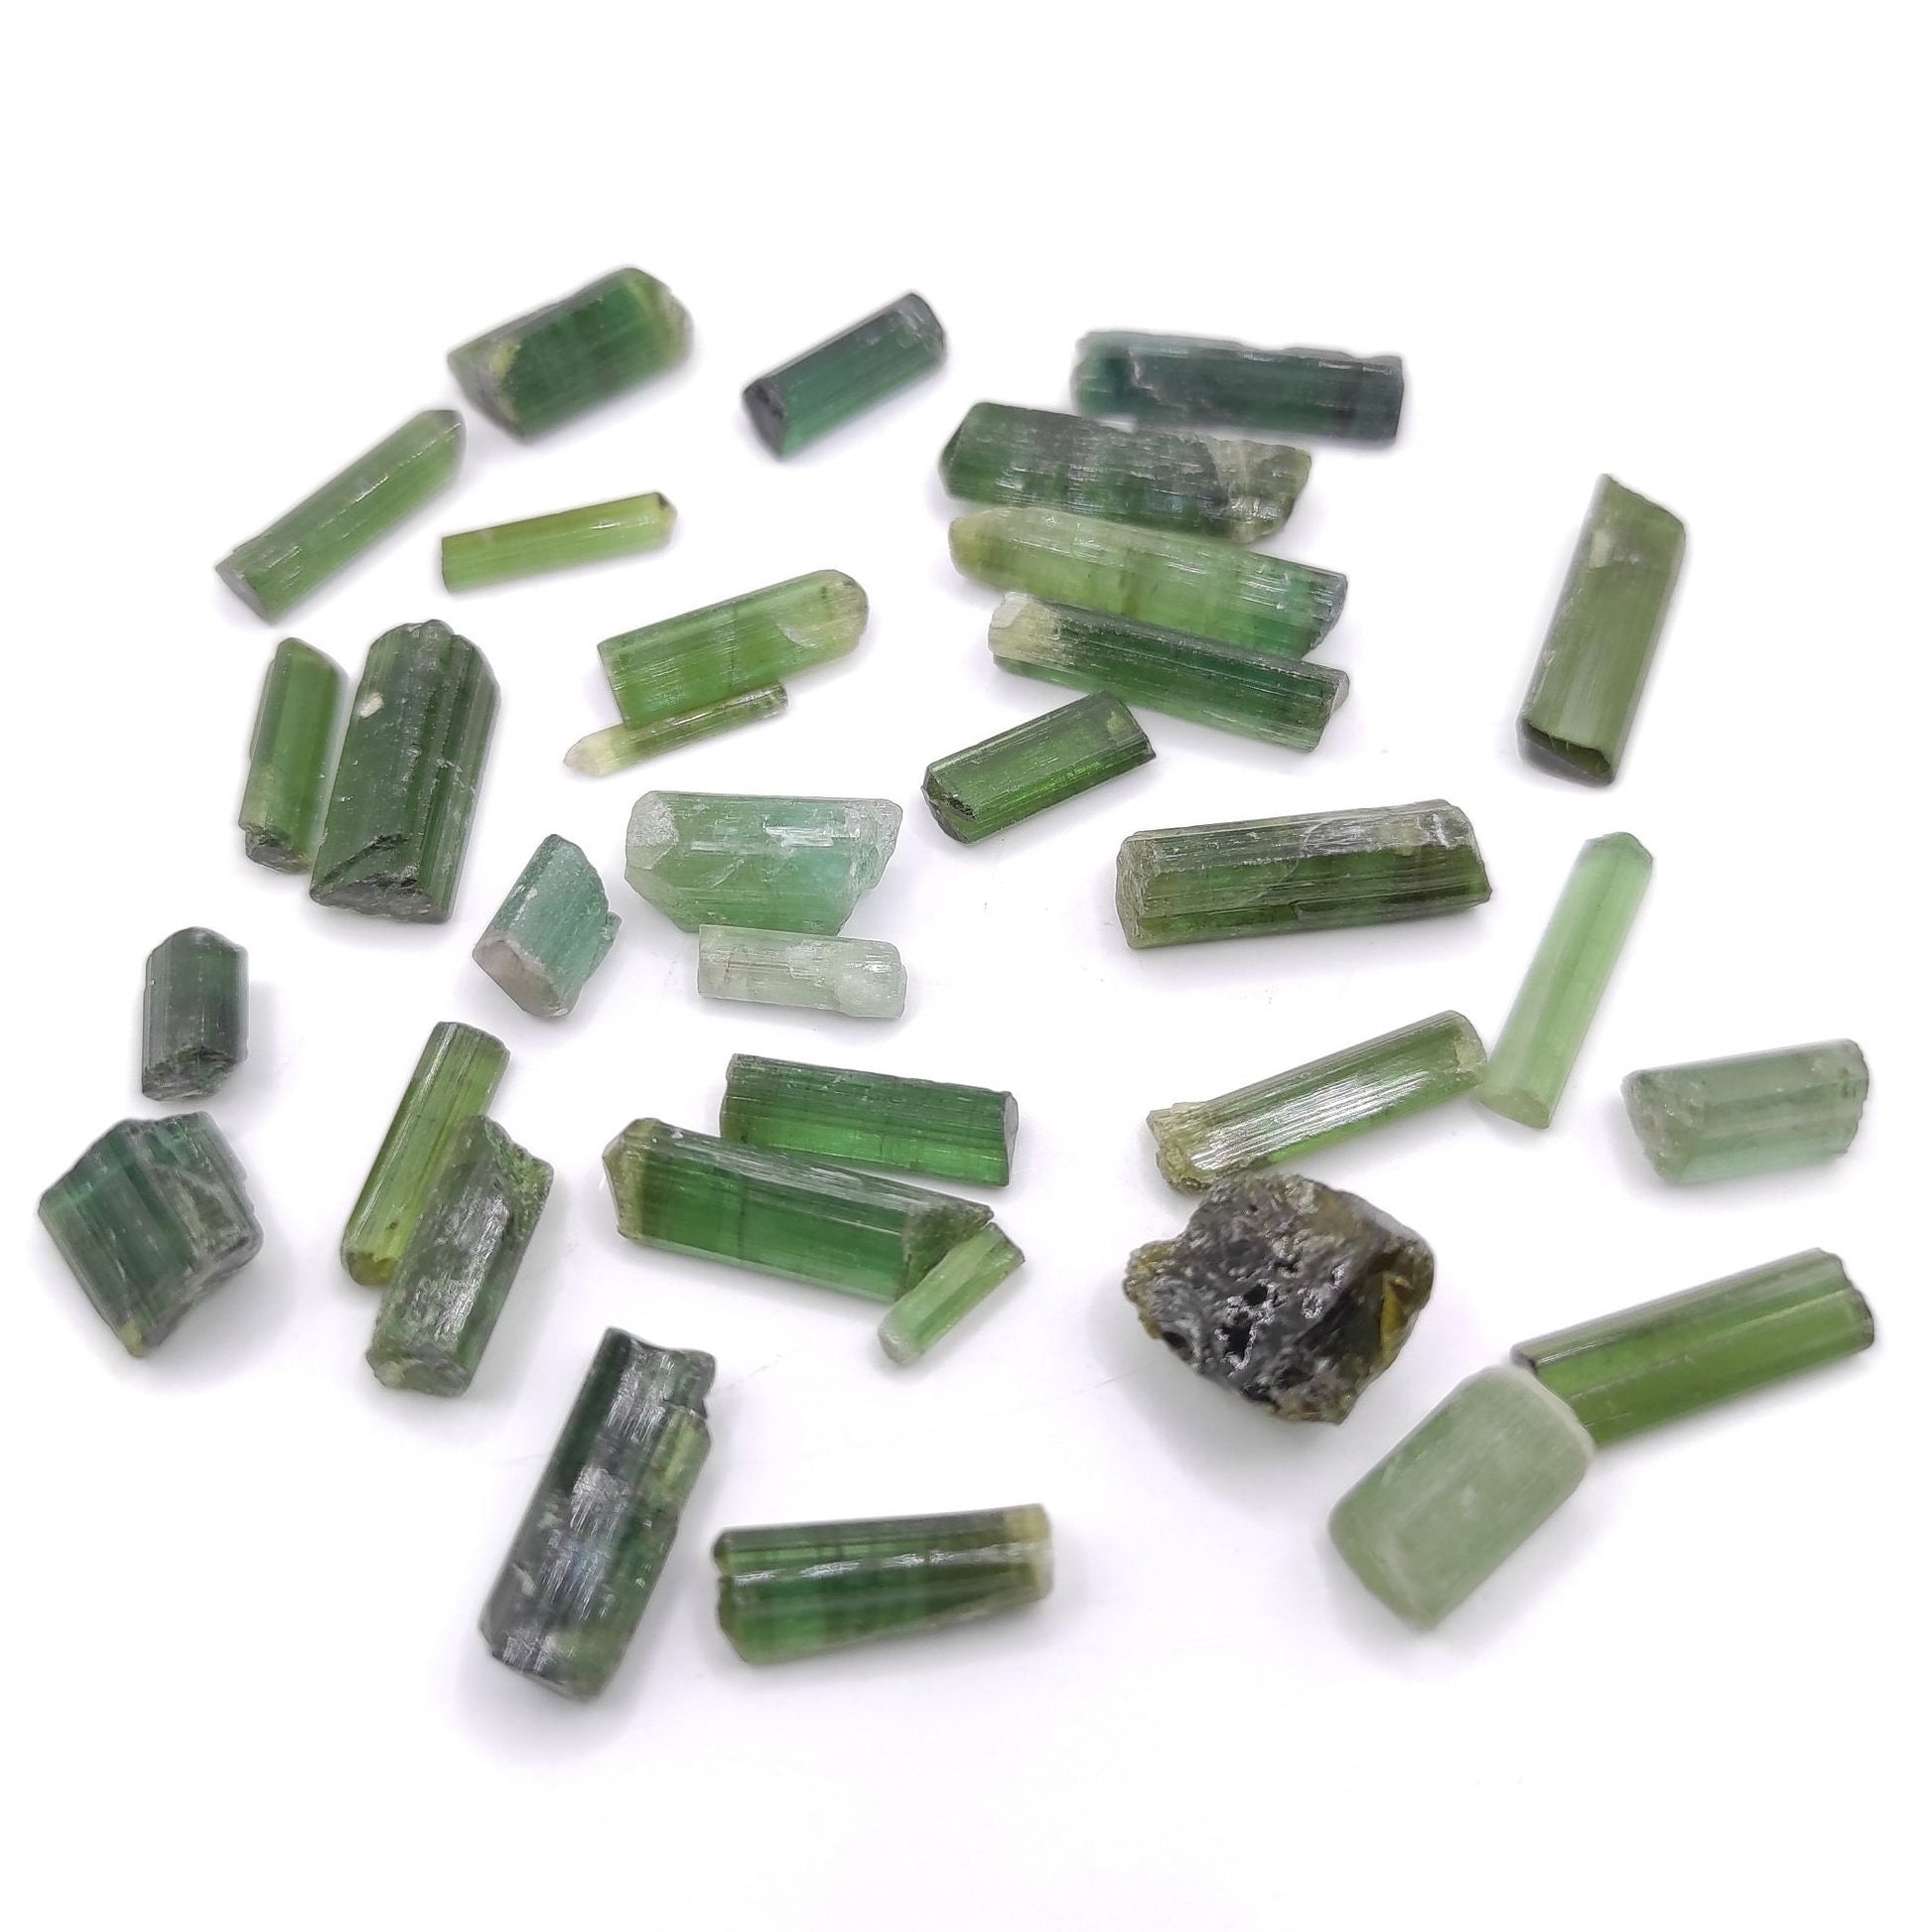 63ct Green Tourmaline Lot - Tourmaline Sticks - Raw Green Tourmaline Crystals - Loose Gemstones - Rough Tourmalines Gemstones - Afghanistan